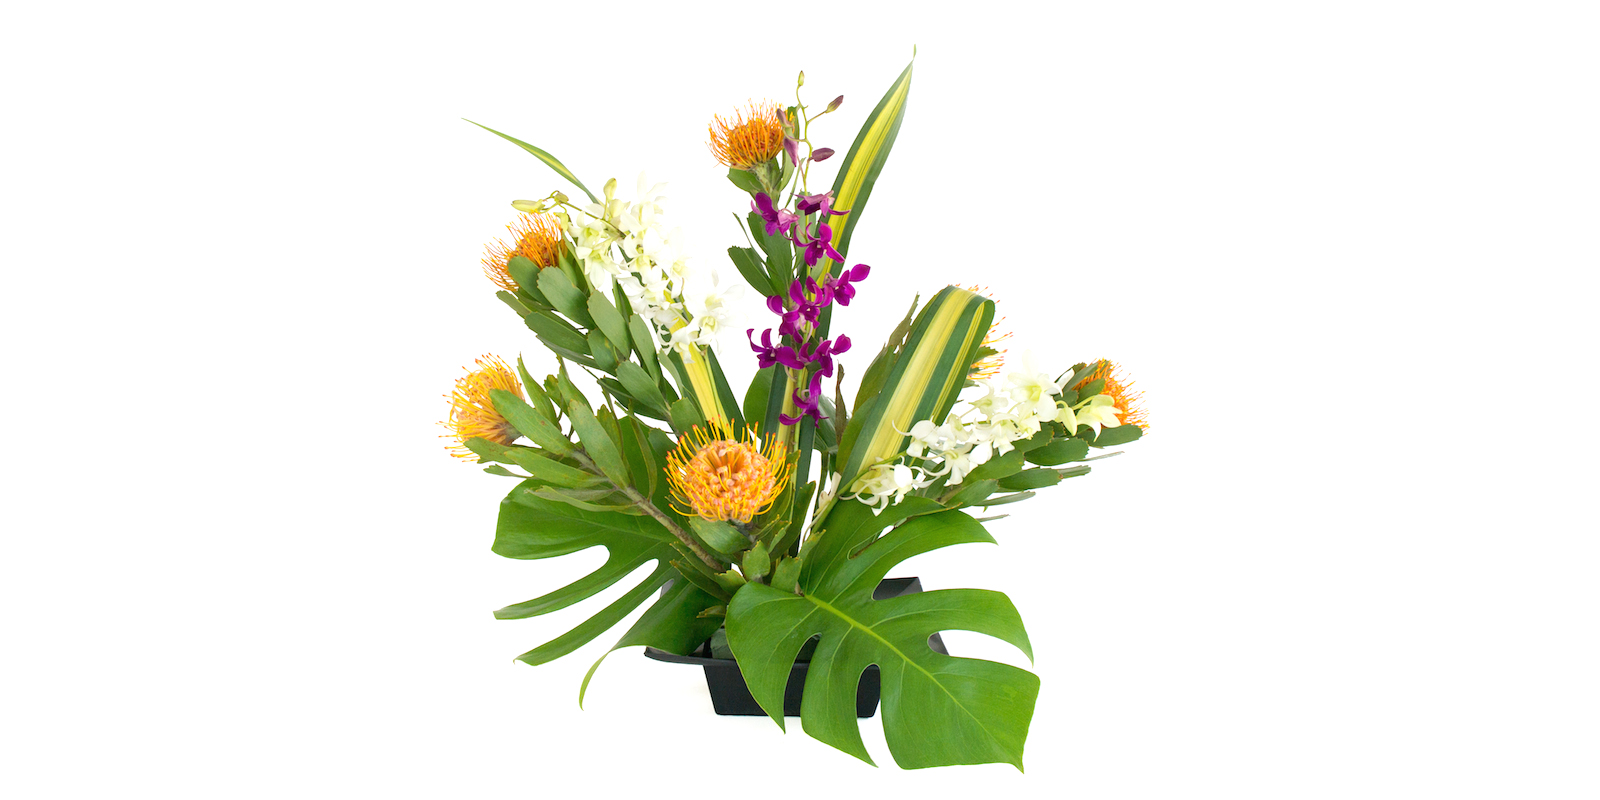 hawaiian flower assortment pincushions and orchids